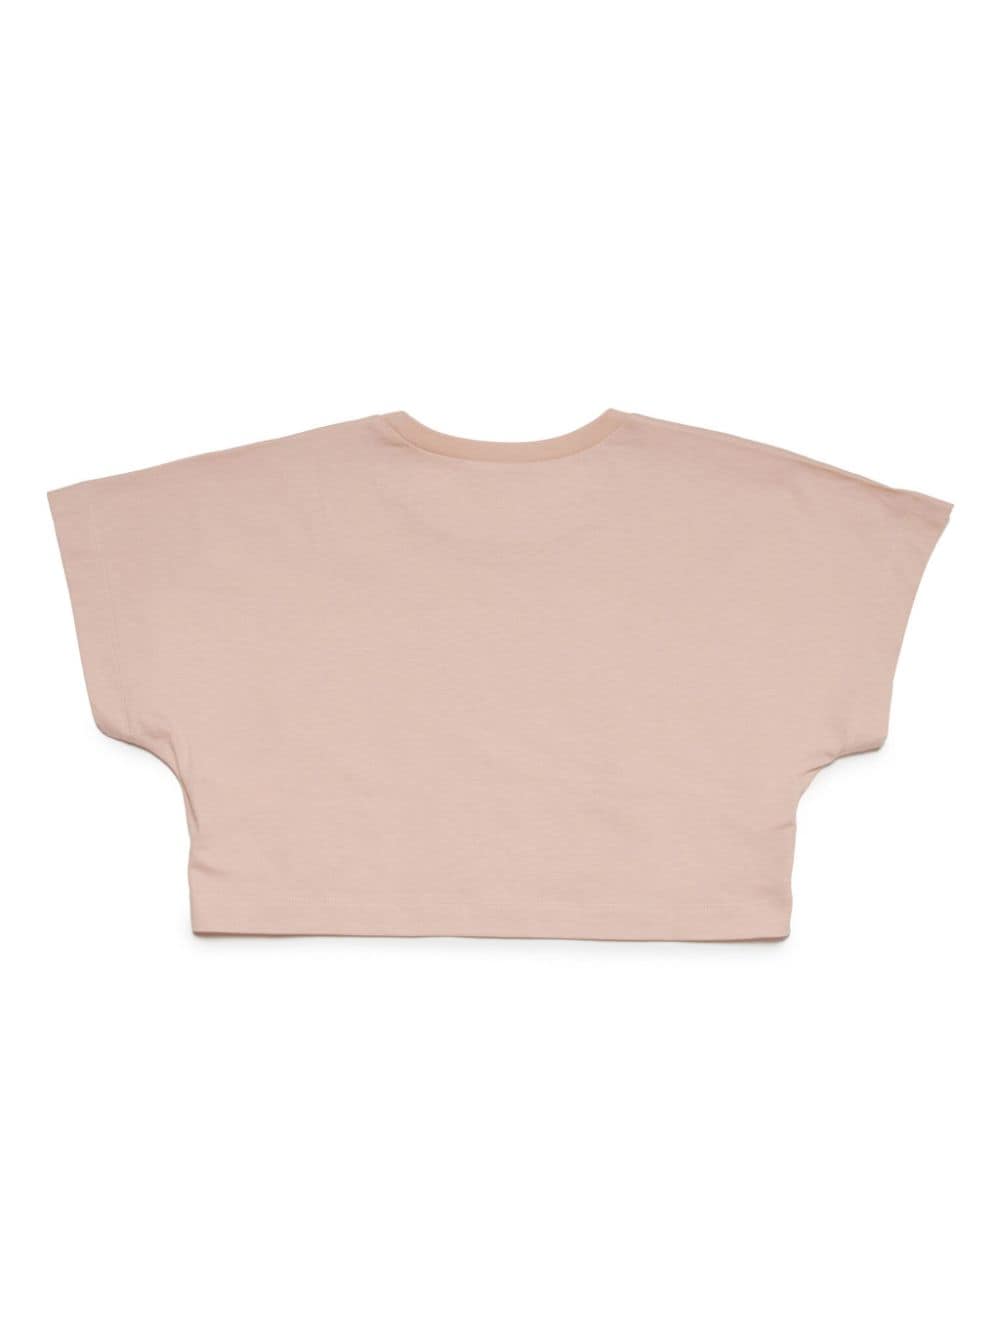 T-shirt rosa/bianca bambina